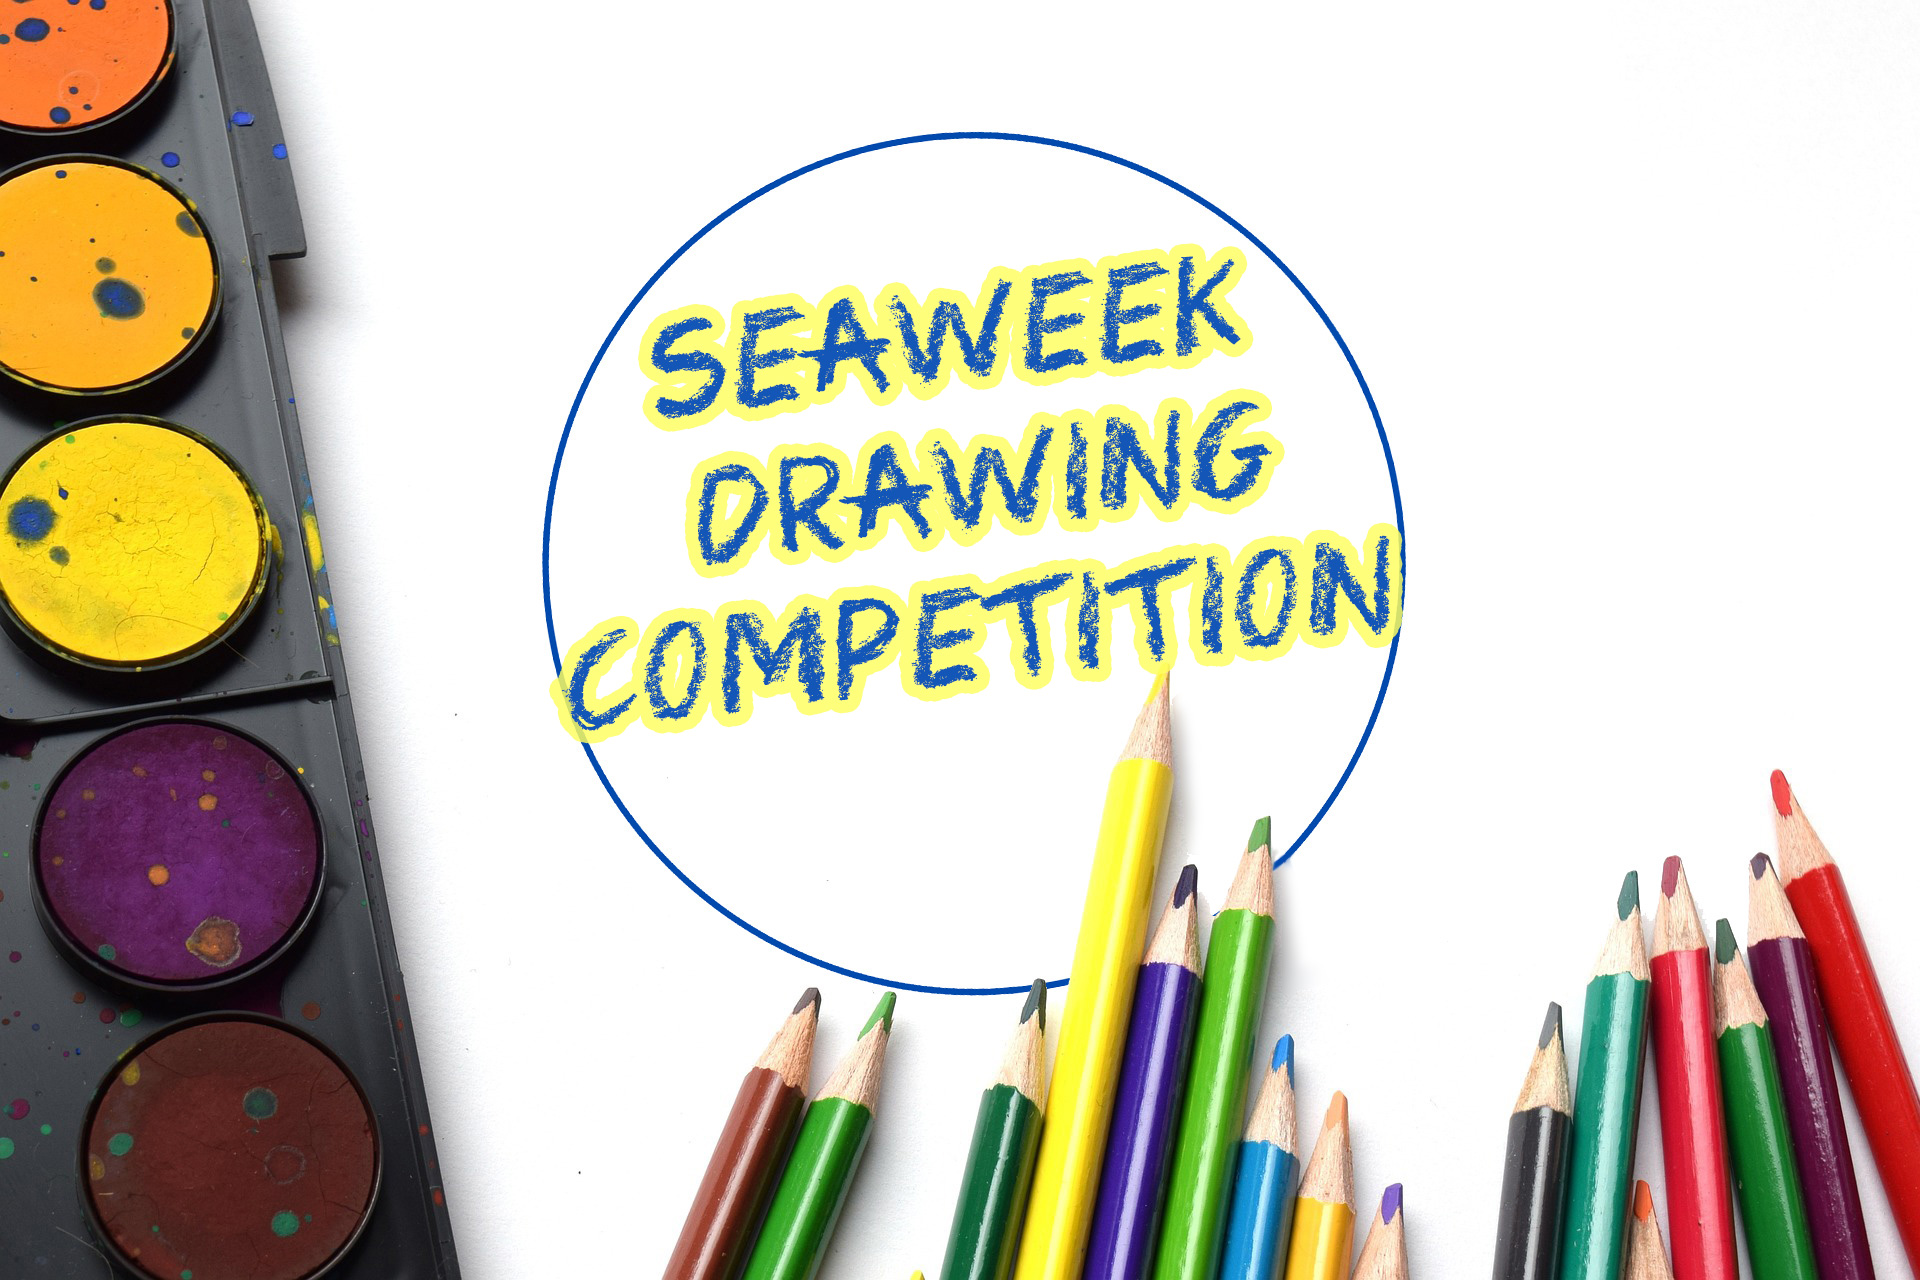 Seaweek Drawing Competition